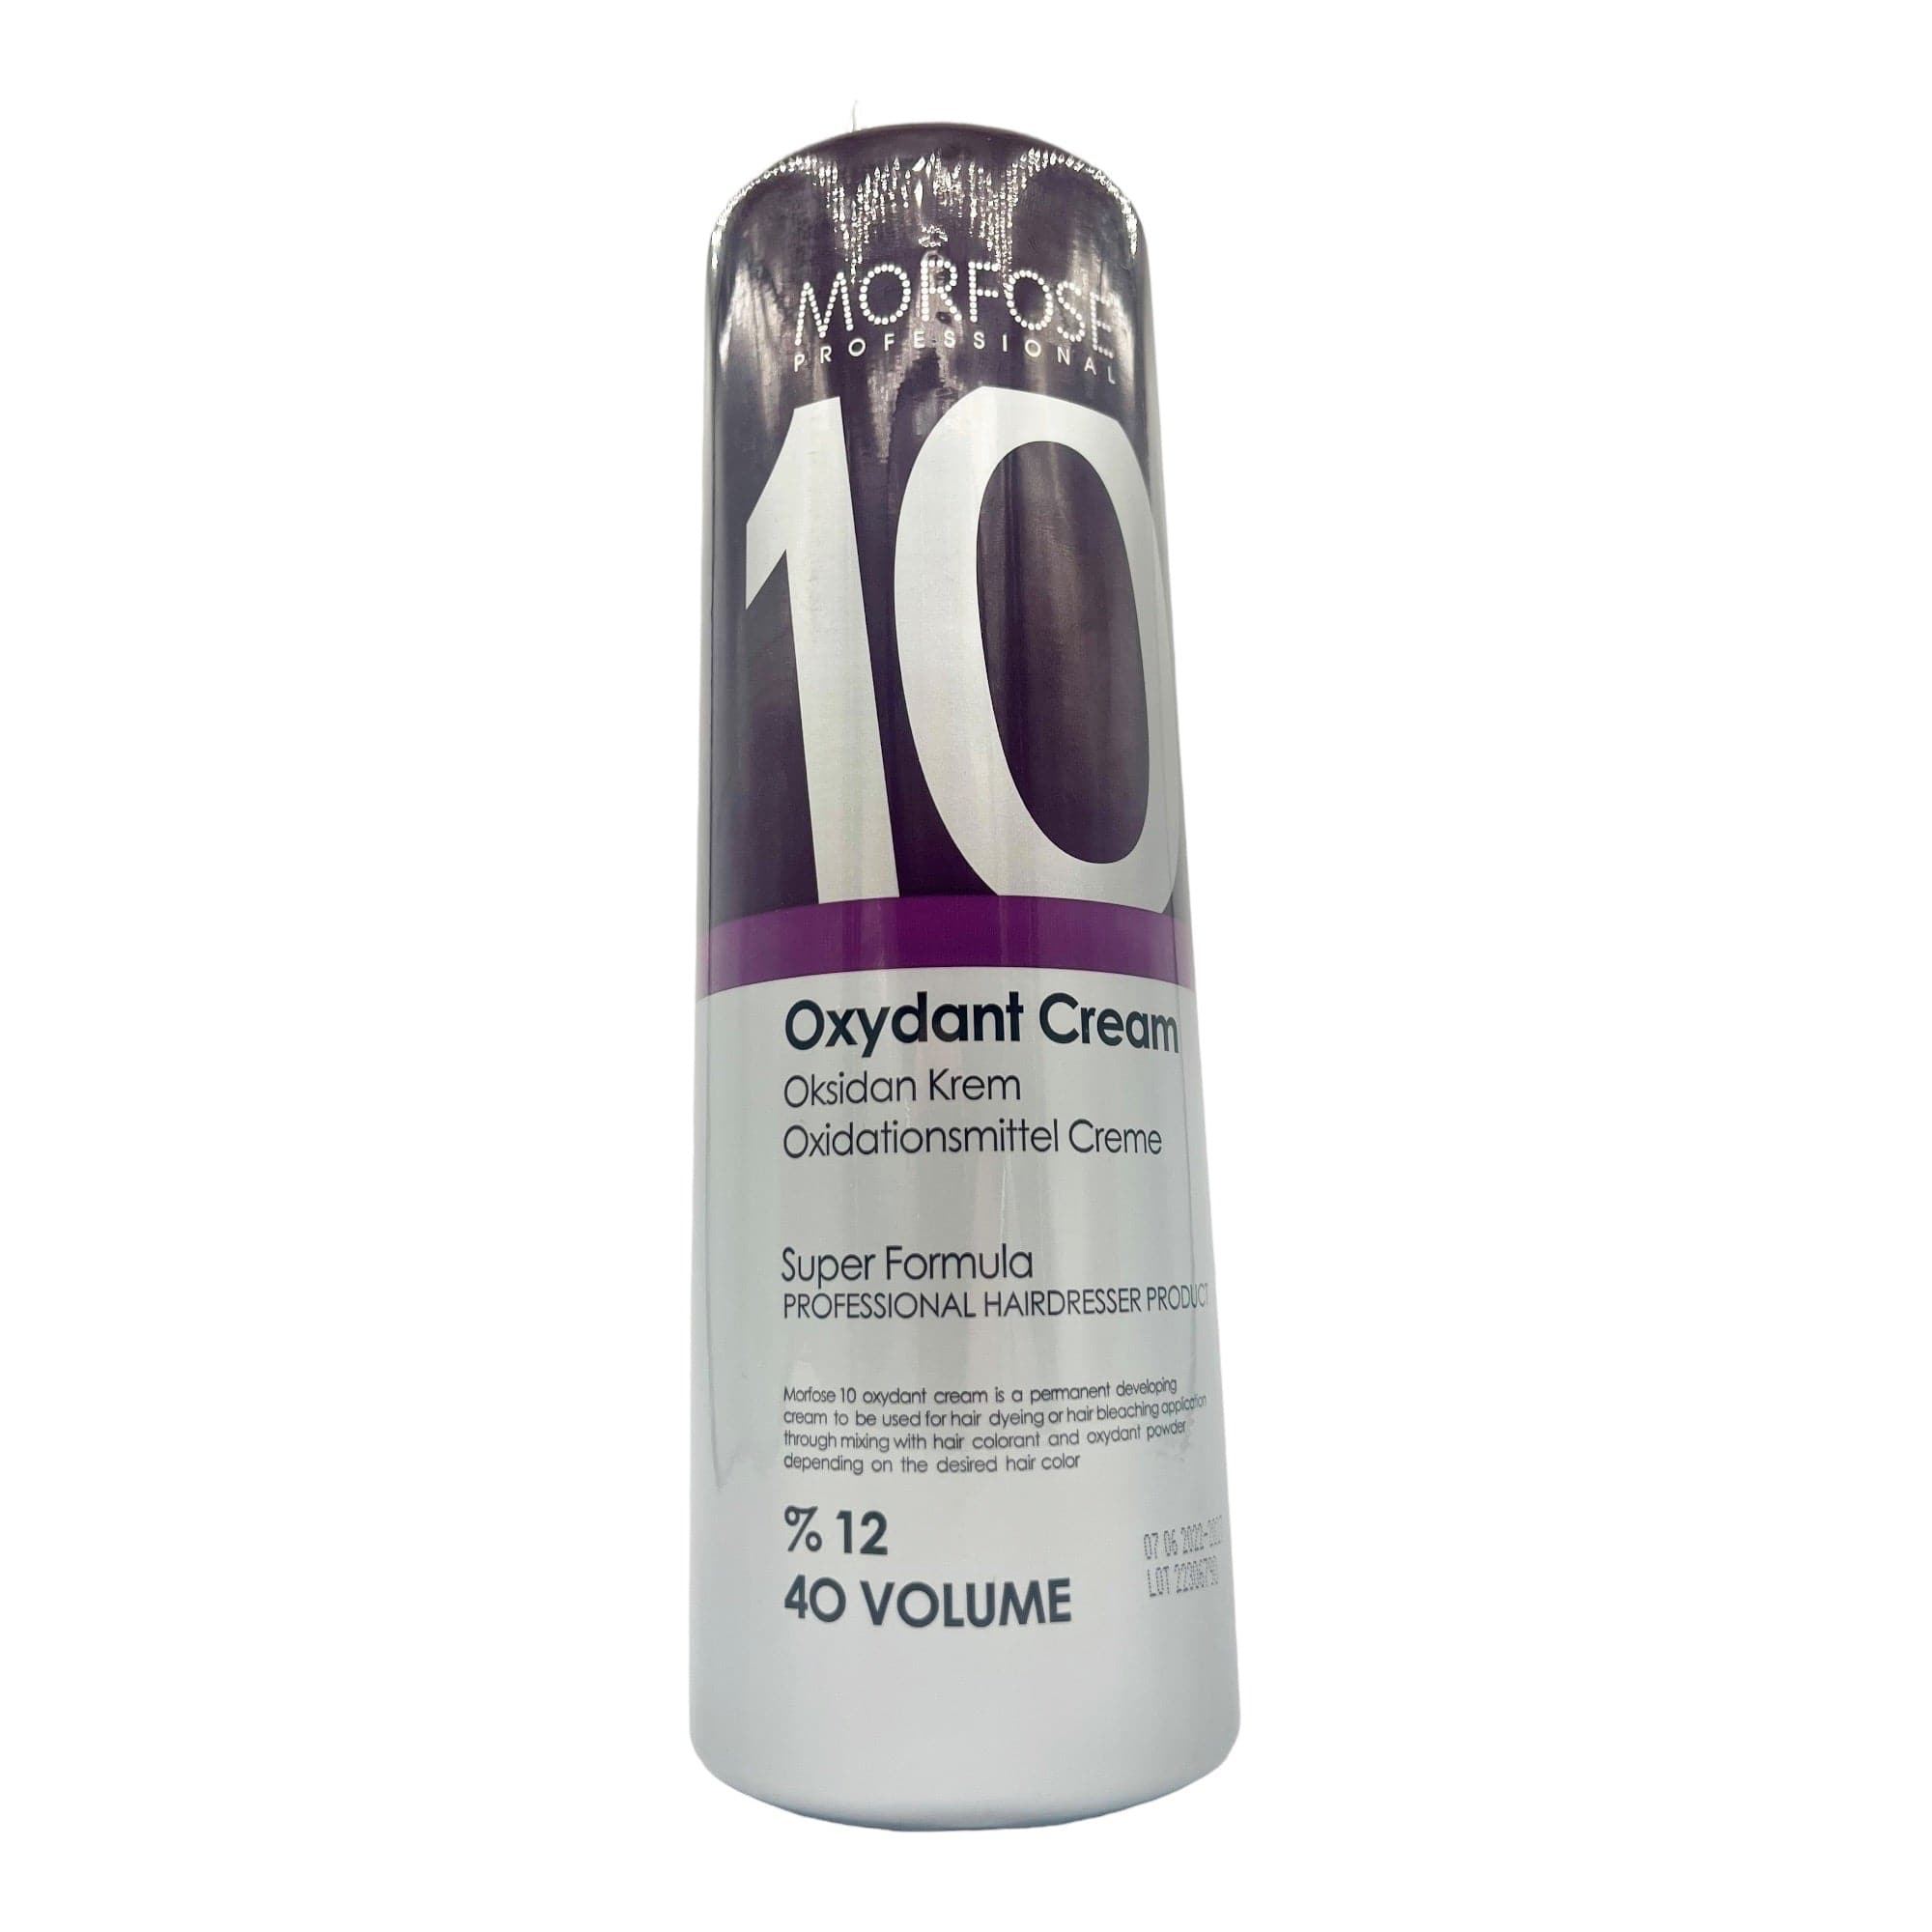 Morfose - 10 Oxidant Cream 40 Volume 1000ml